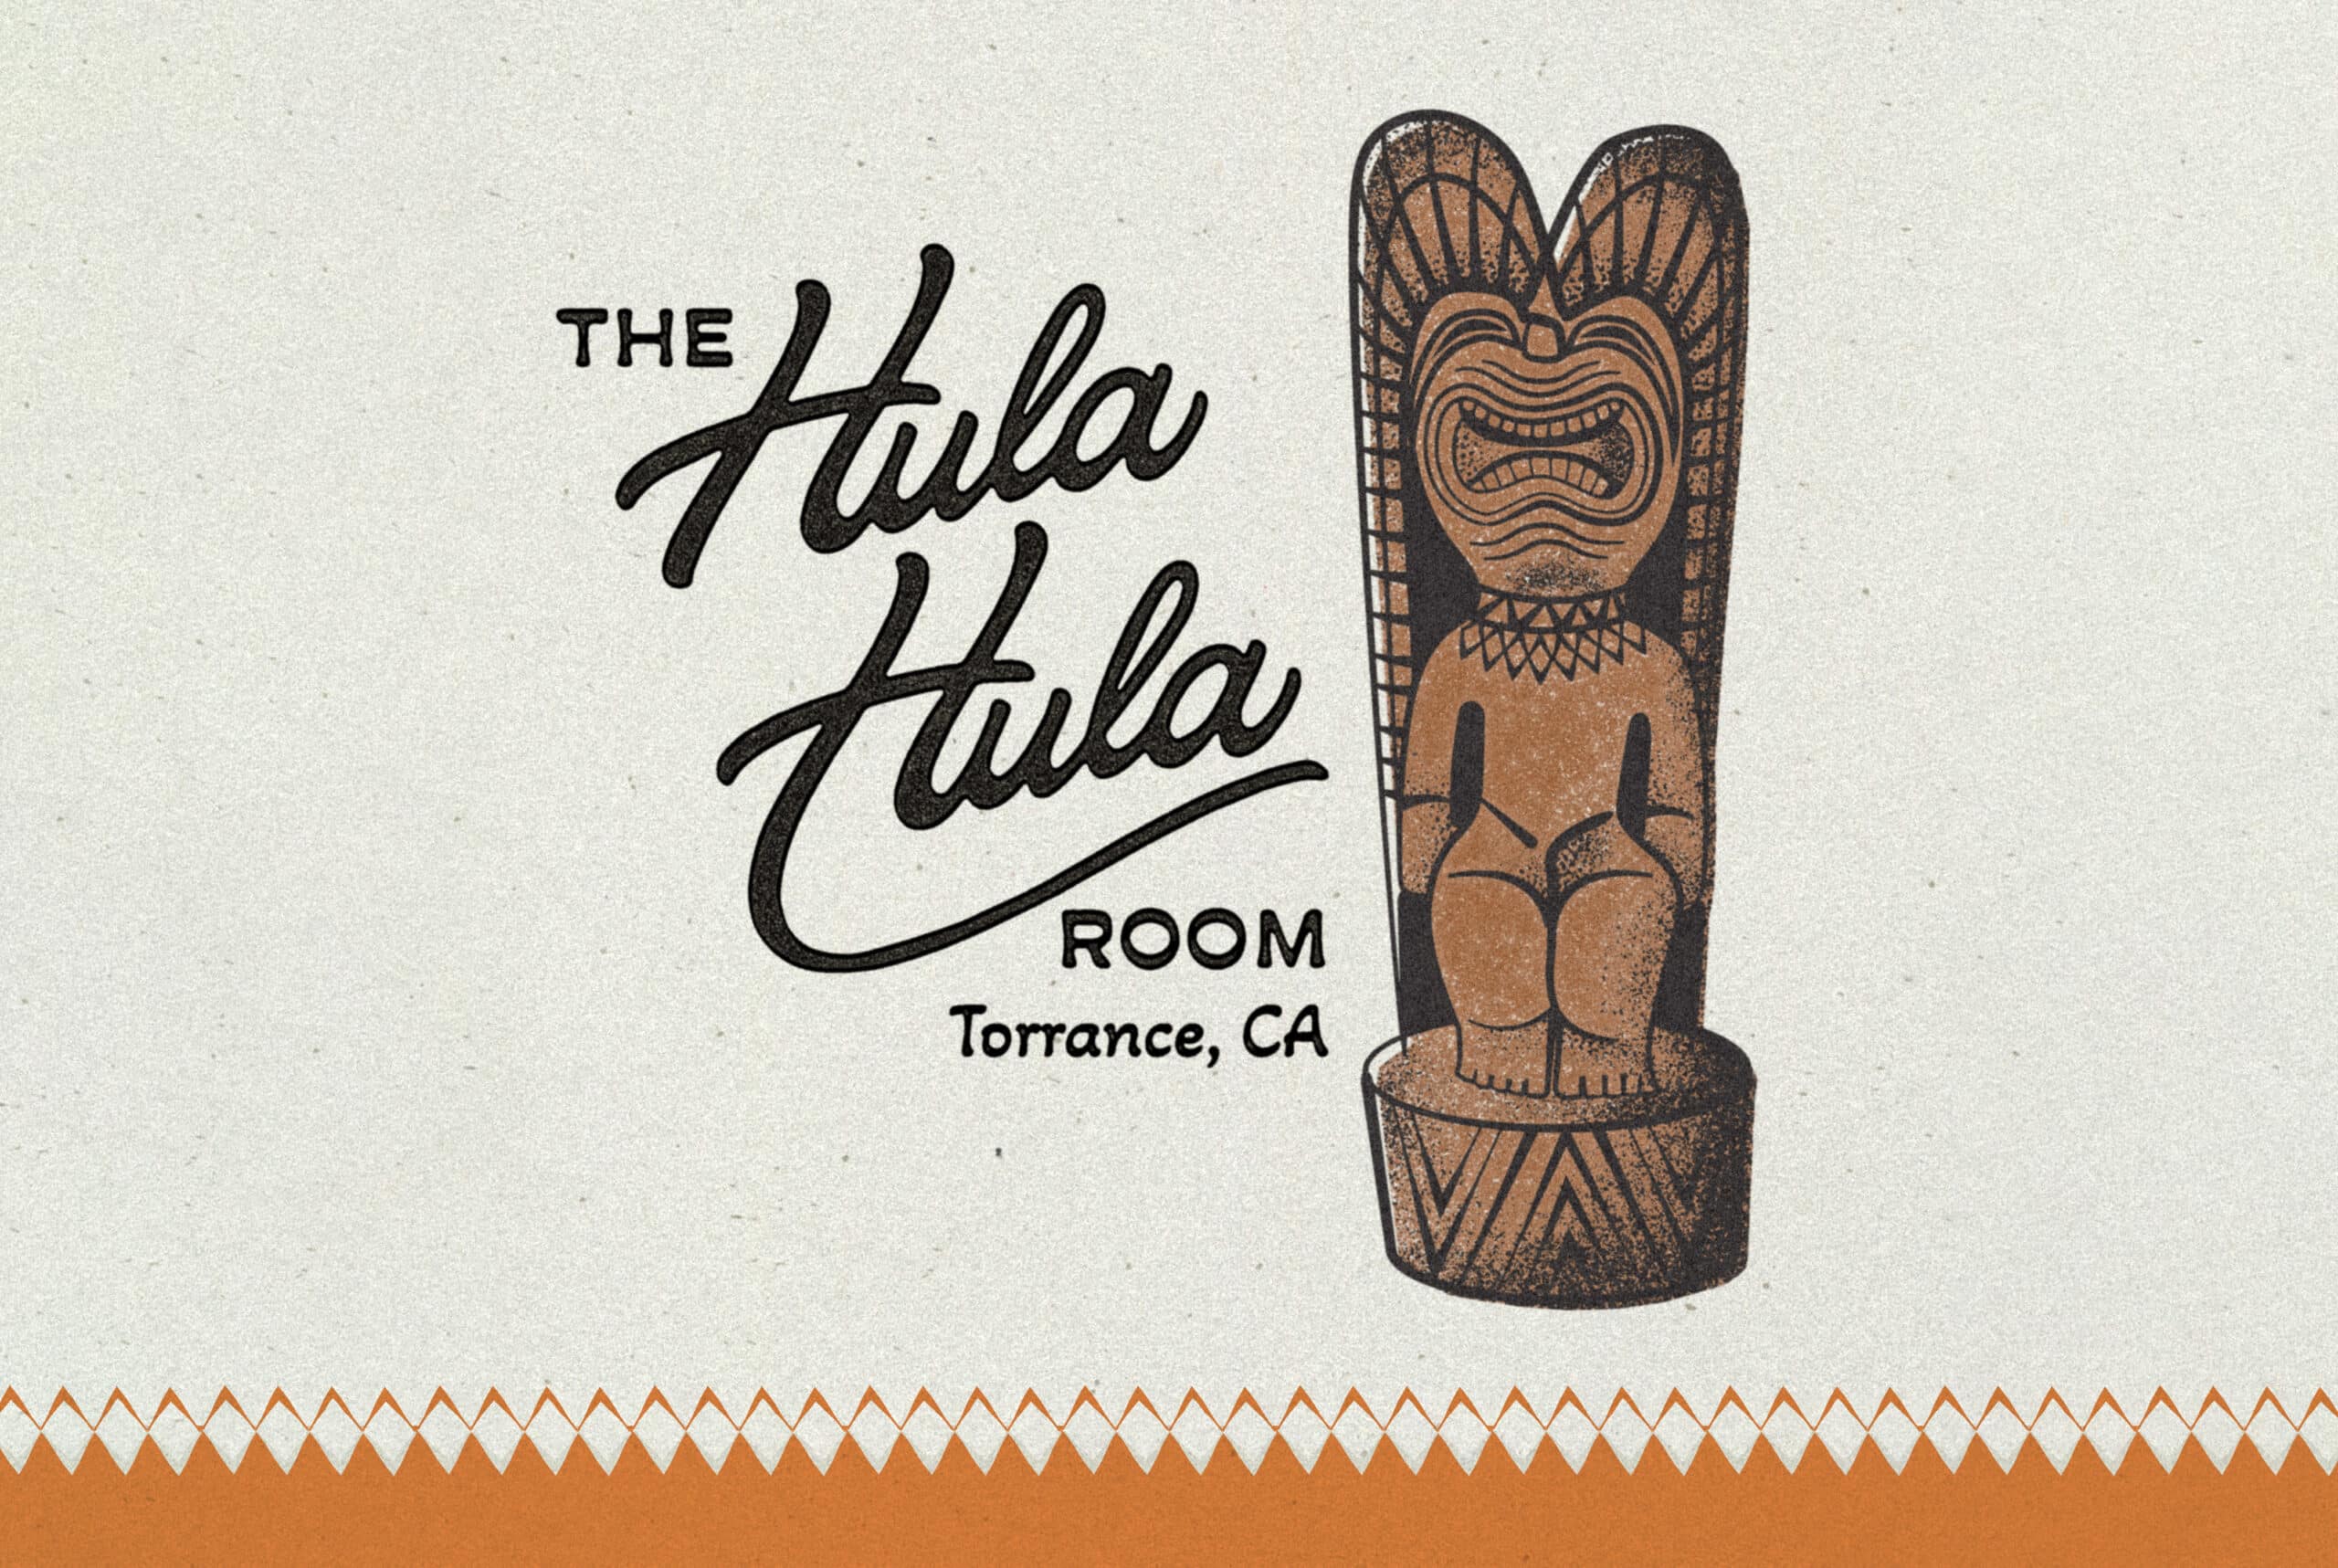 Logo Design for The Hula Hula Room Tiki Bar in Torrance California designed by Stellen Design logo design and branding agency in Los Angeles California specializing in logo design for hospitality brands